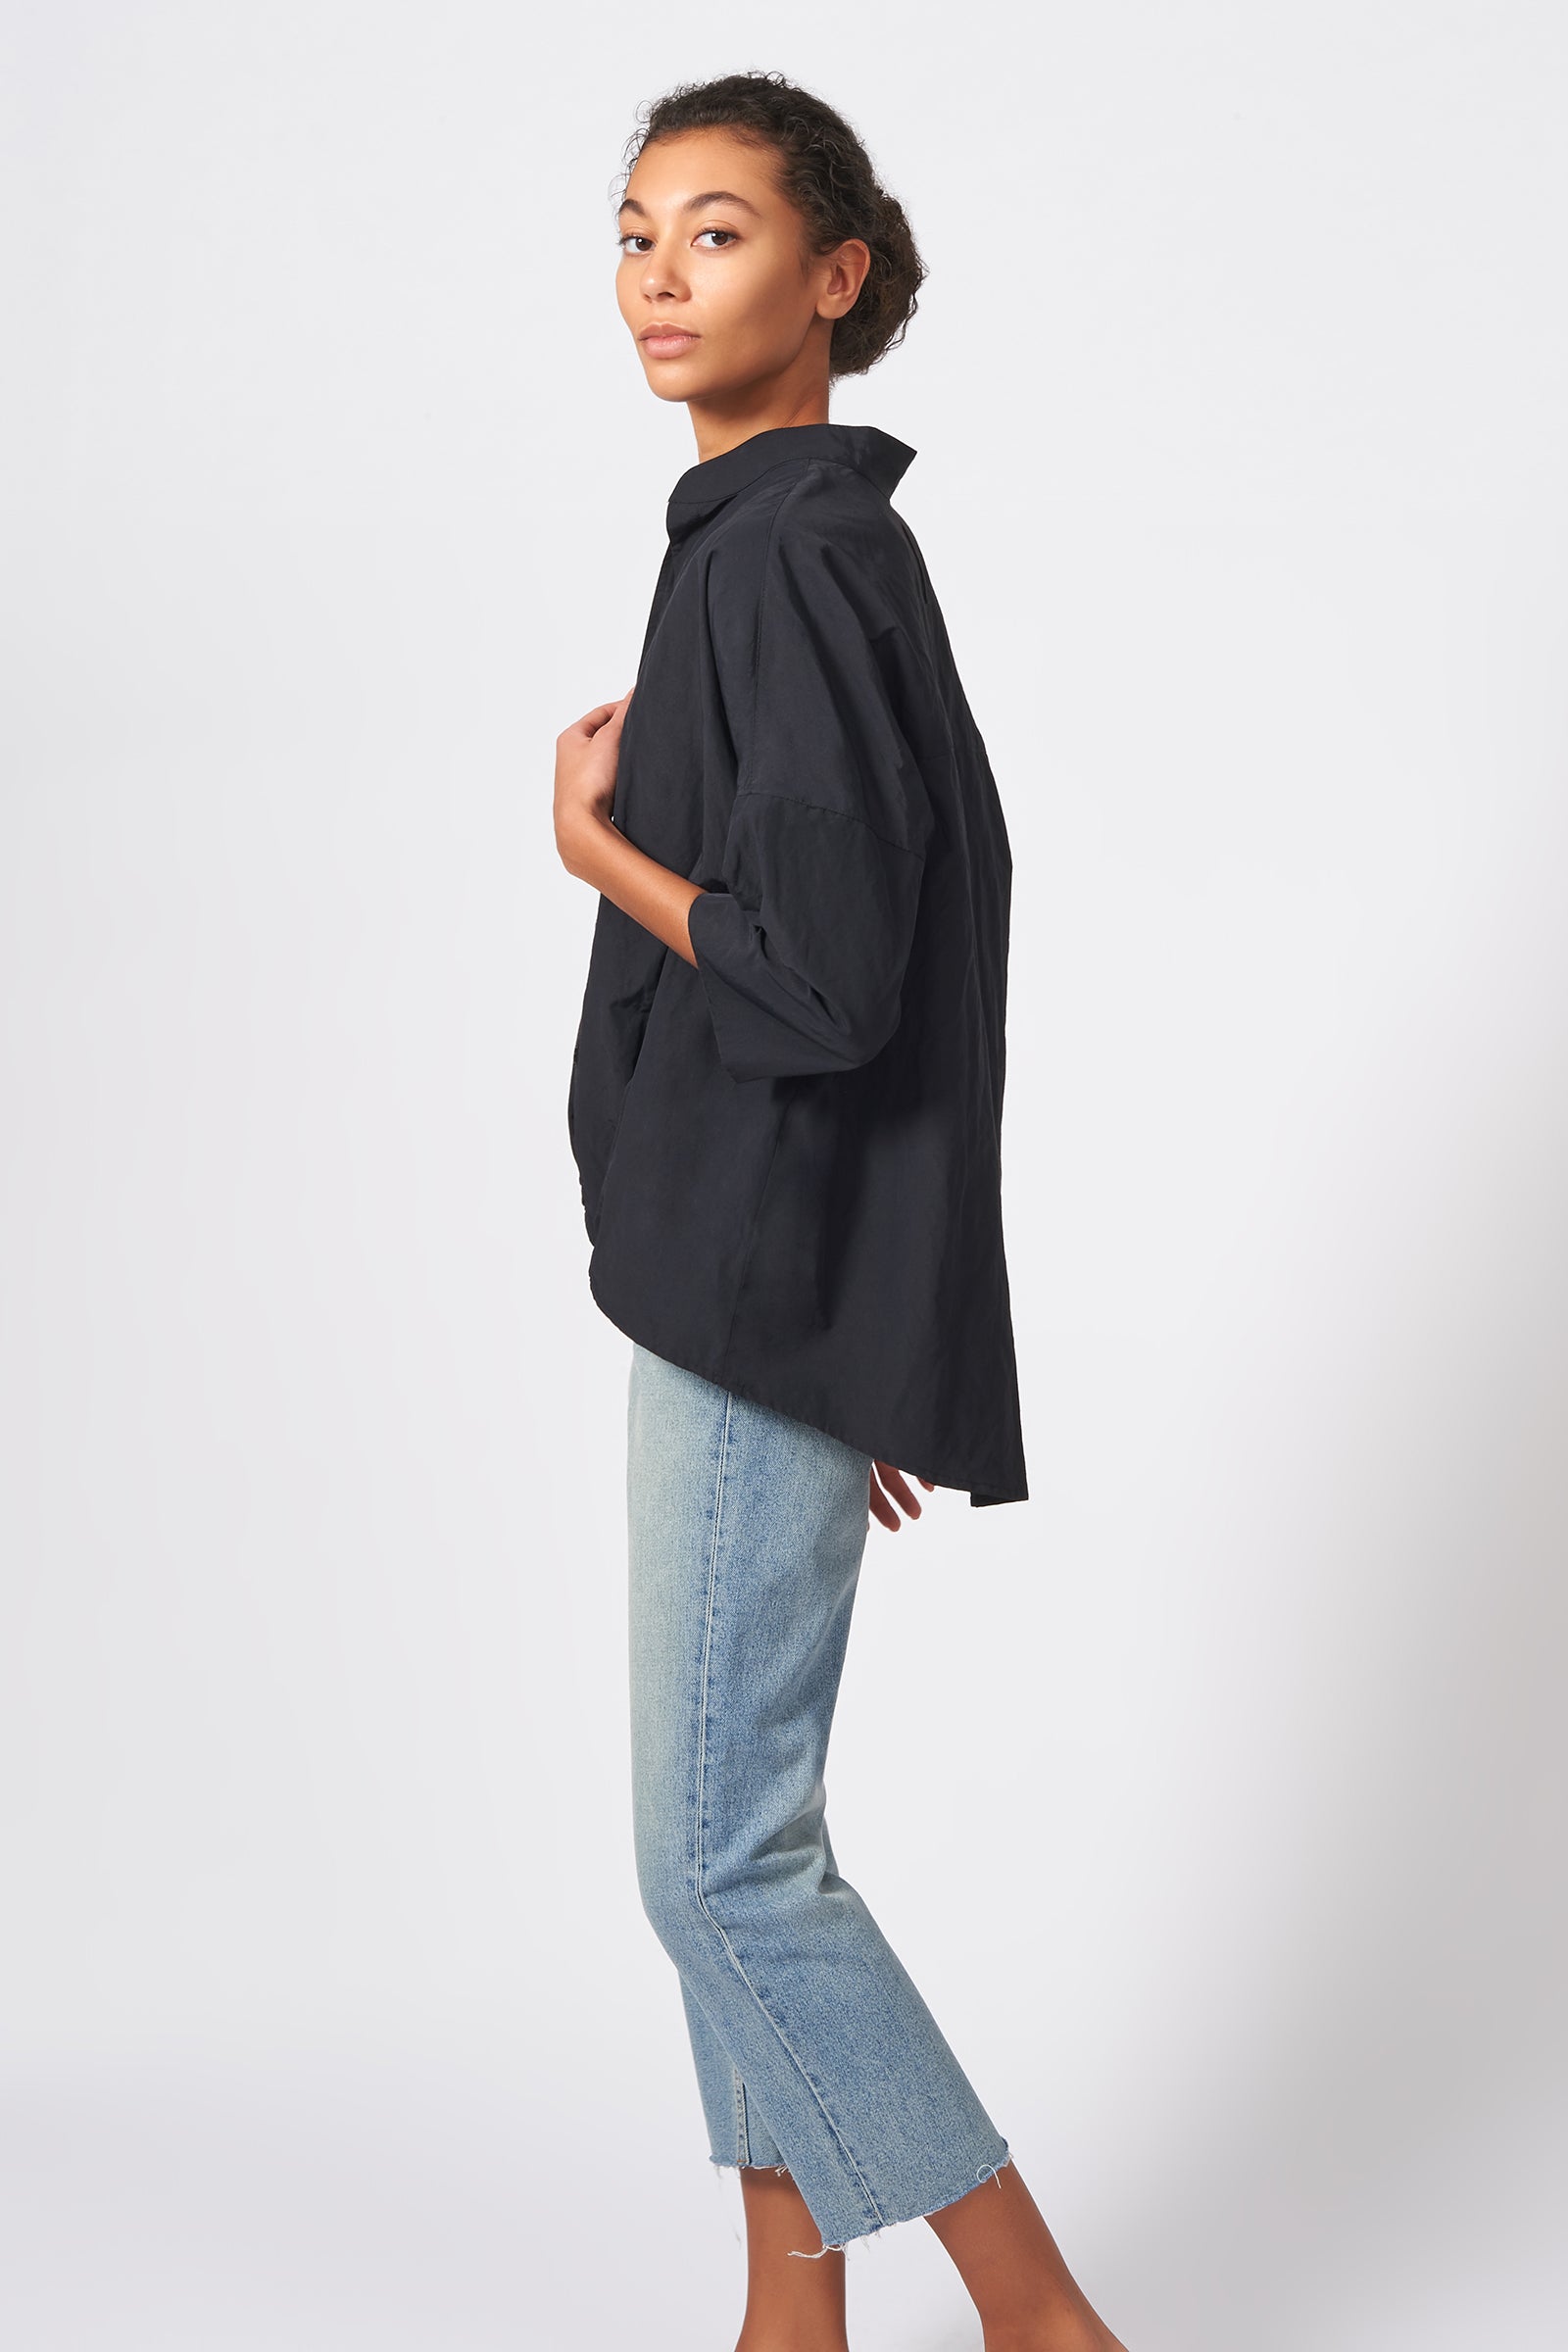 Kal Rieman Pleat Hem Kimono Cotton Nylon in Black on Model Side View